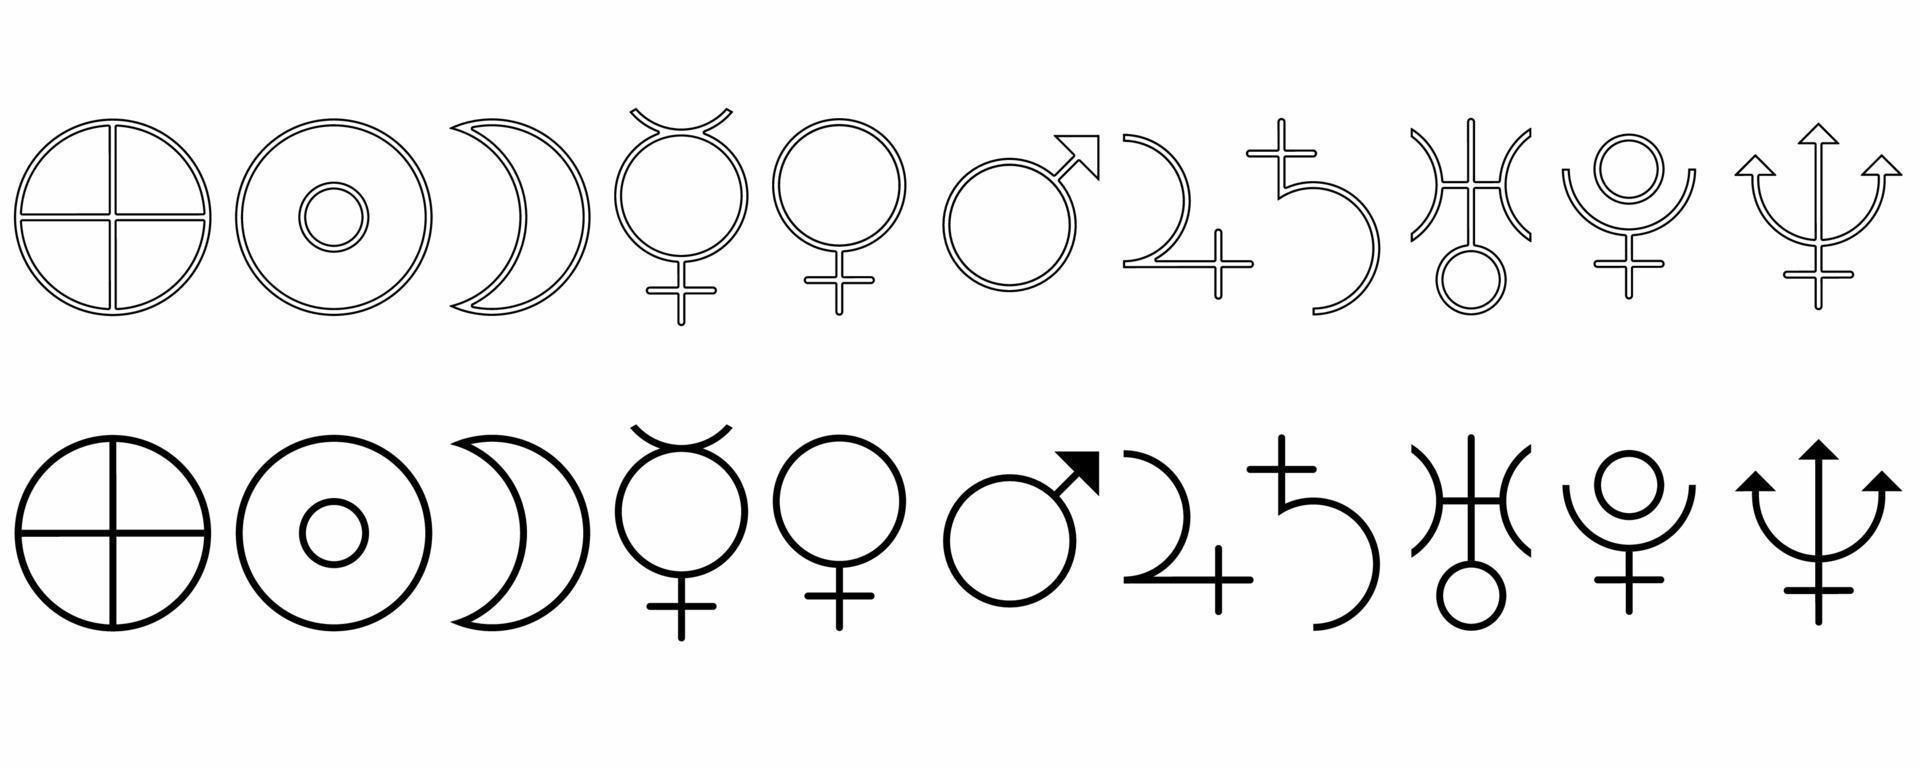 astrological sign set isolated on white background.Sun, Moon, Earth, Mercury, Venus, Mars, Jupiter, Saturn, Uranus, Neptune, Pluto Symbol vector